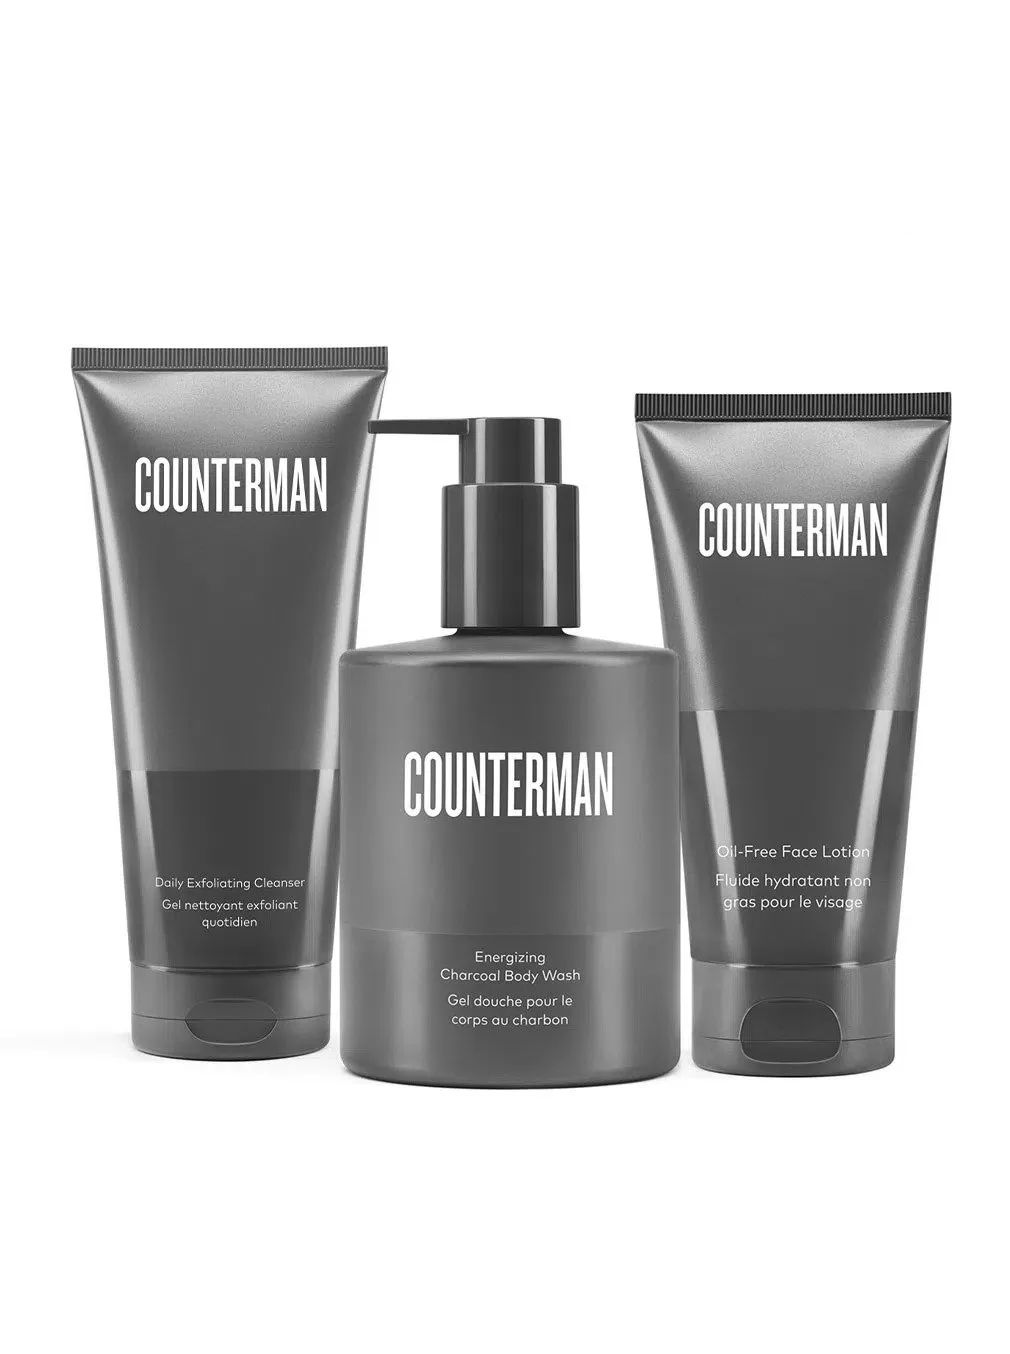 Counterman Bundle - Beautycounter - Skin Care, Makeup, Bath and Body and more! | Beautycounter.com